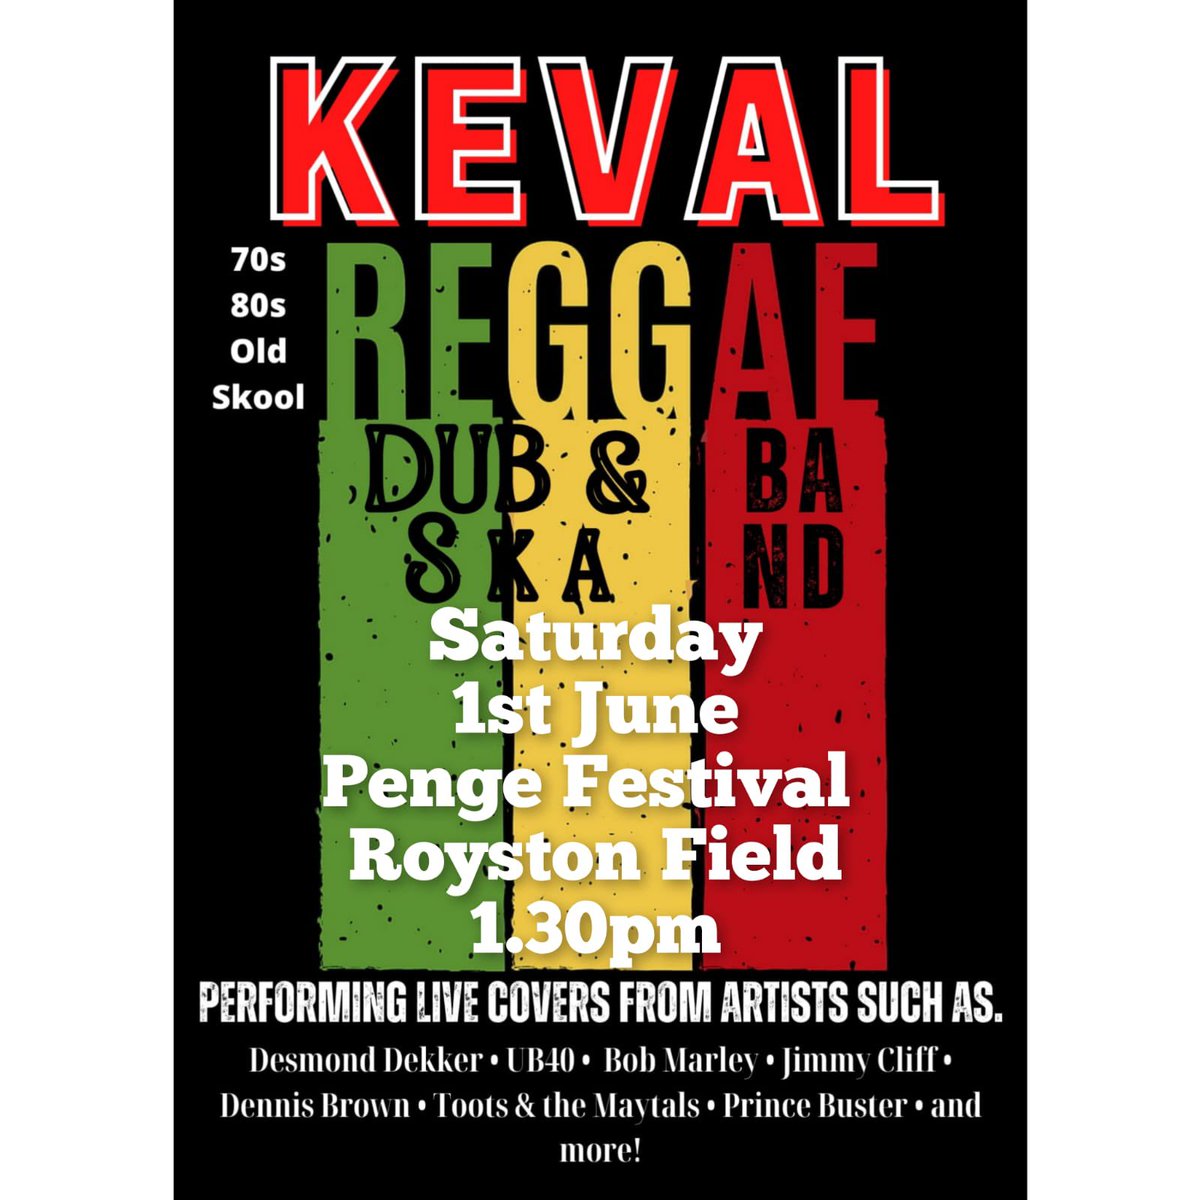 We are looking forward to welcoming back KEVAL at the Penge Festival opening fete on 1st June @thepengetourist @propertyworld26 @SE20Penge @eastpengegarden @Beckenham @CrystalPalacePK